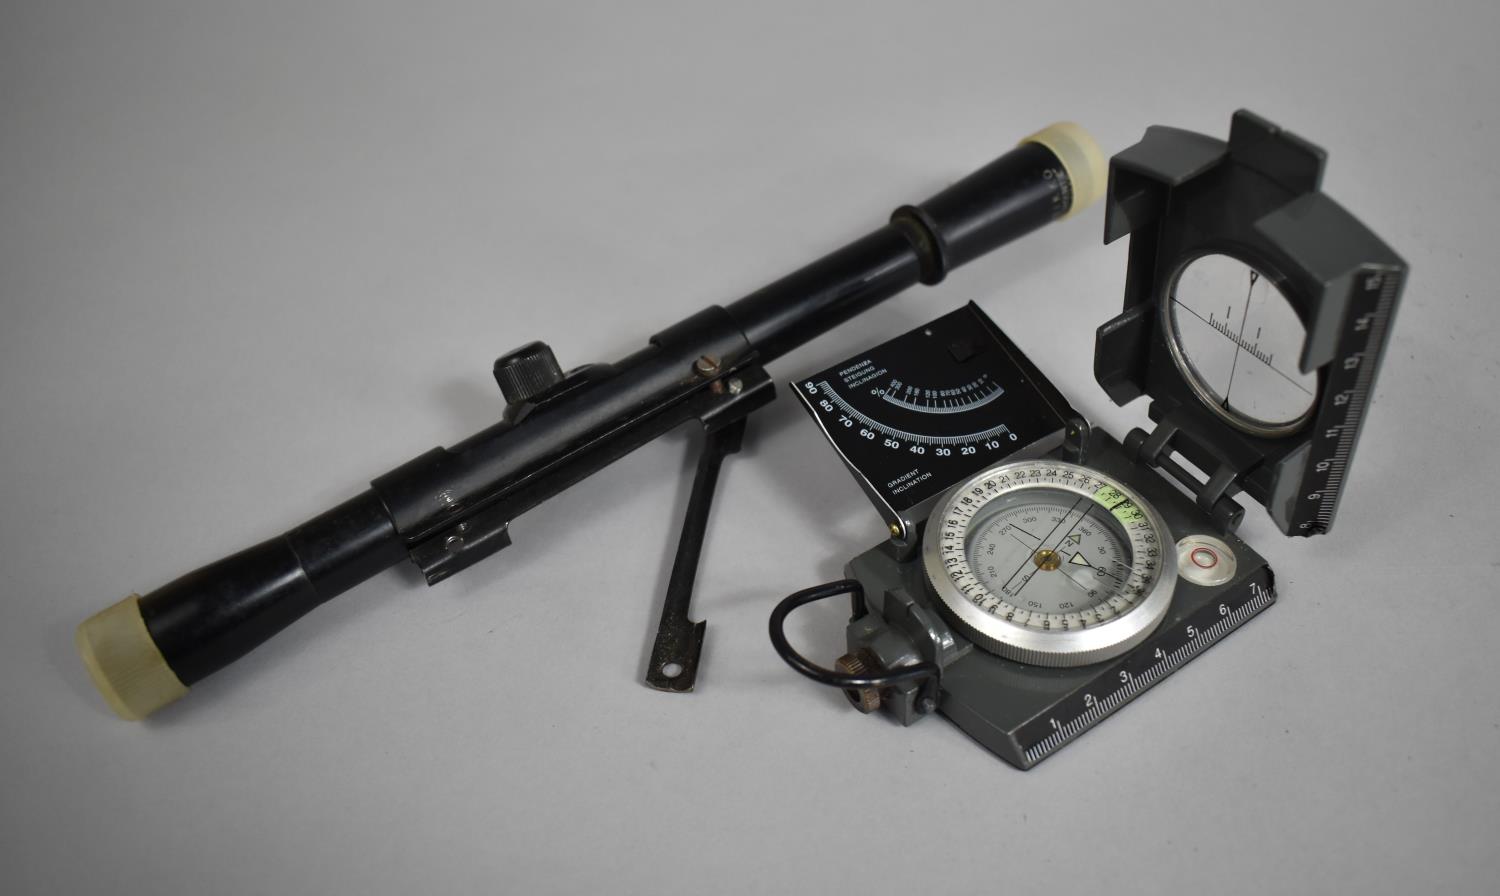 A Konustar Compass Together with a Nikko Mountie 4x18 Riflescope